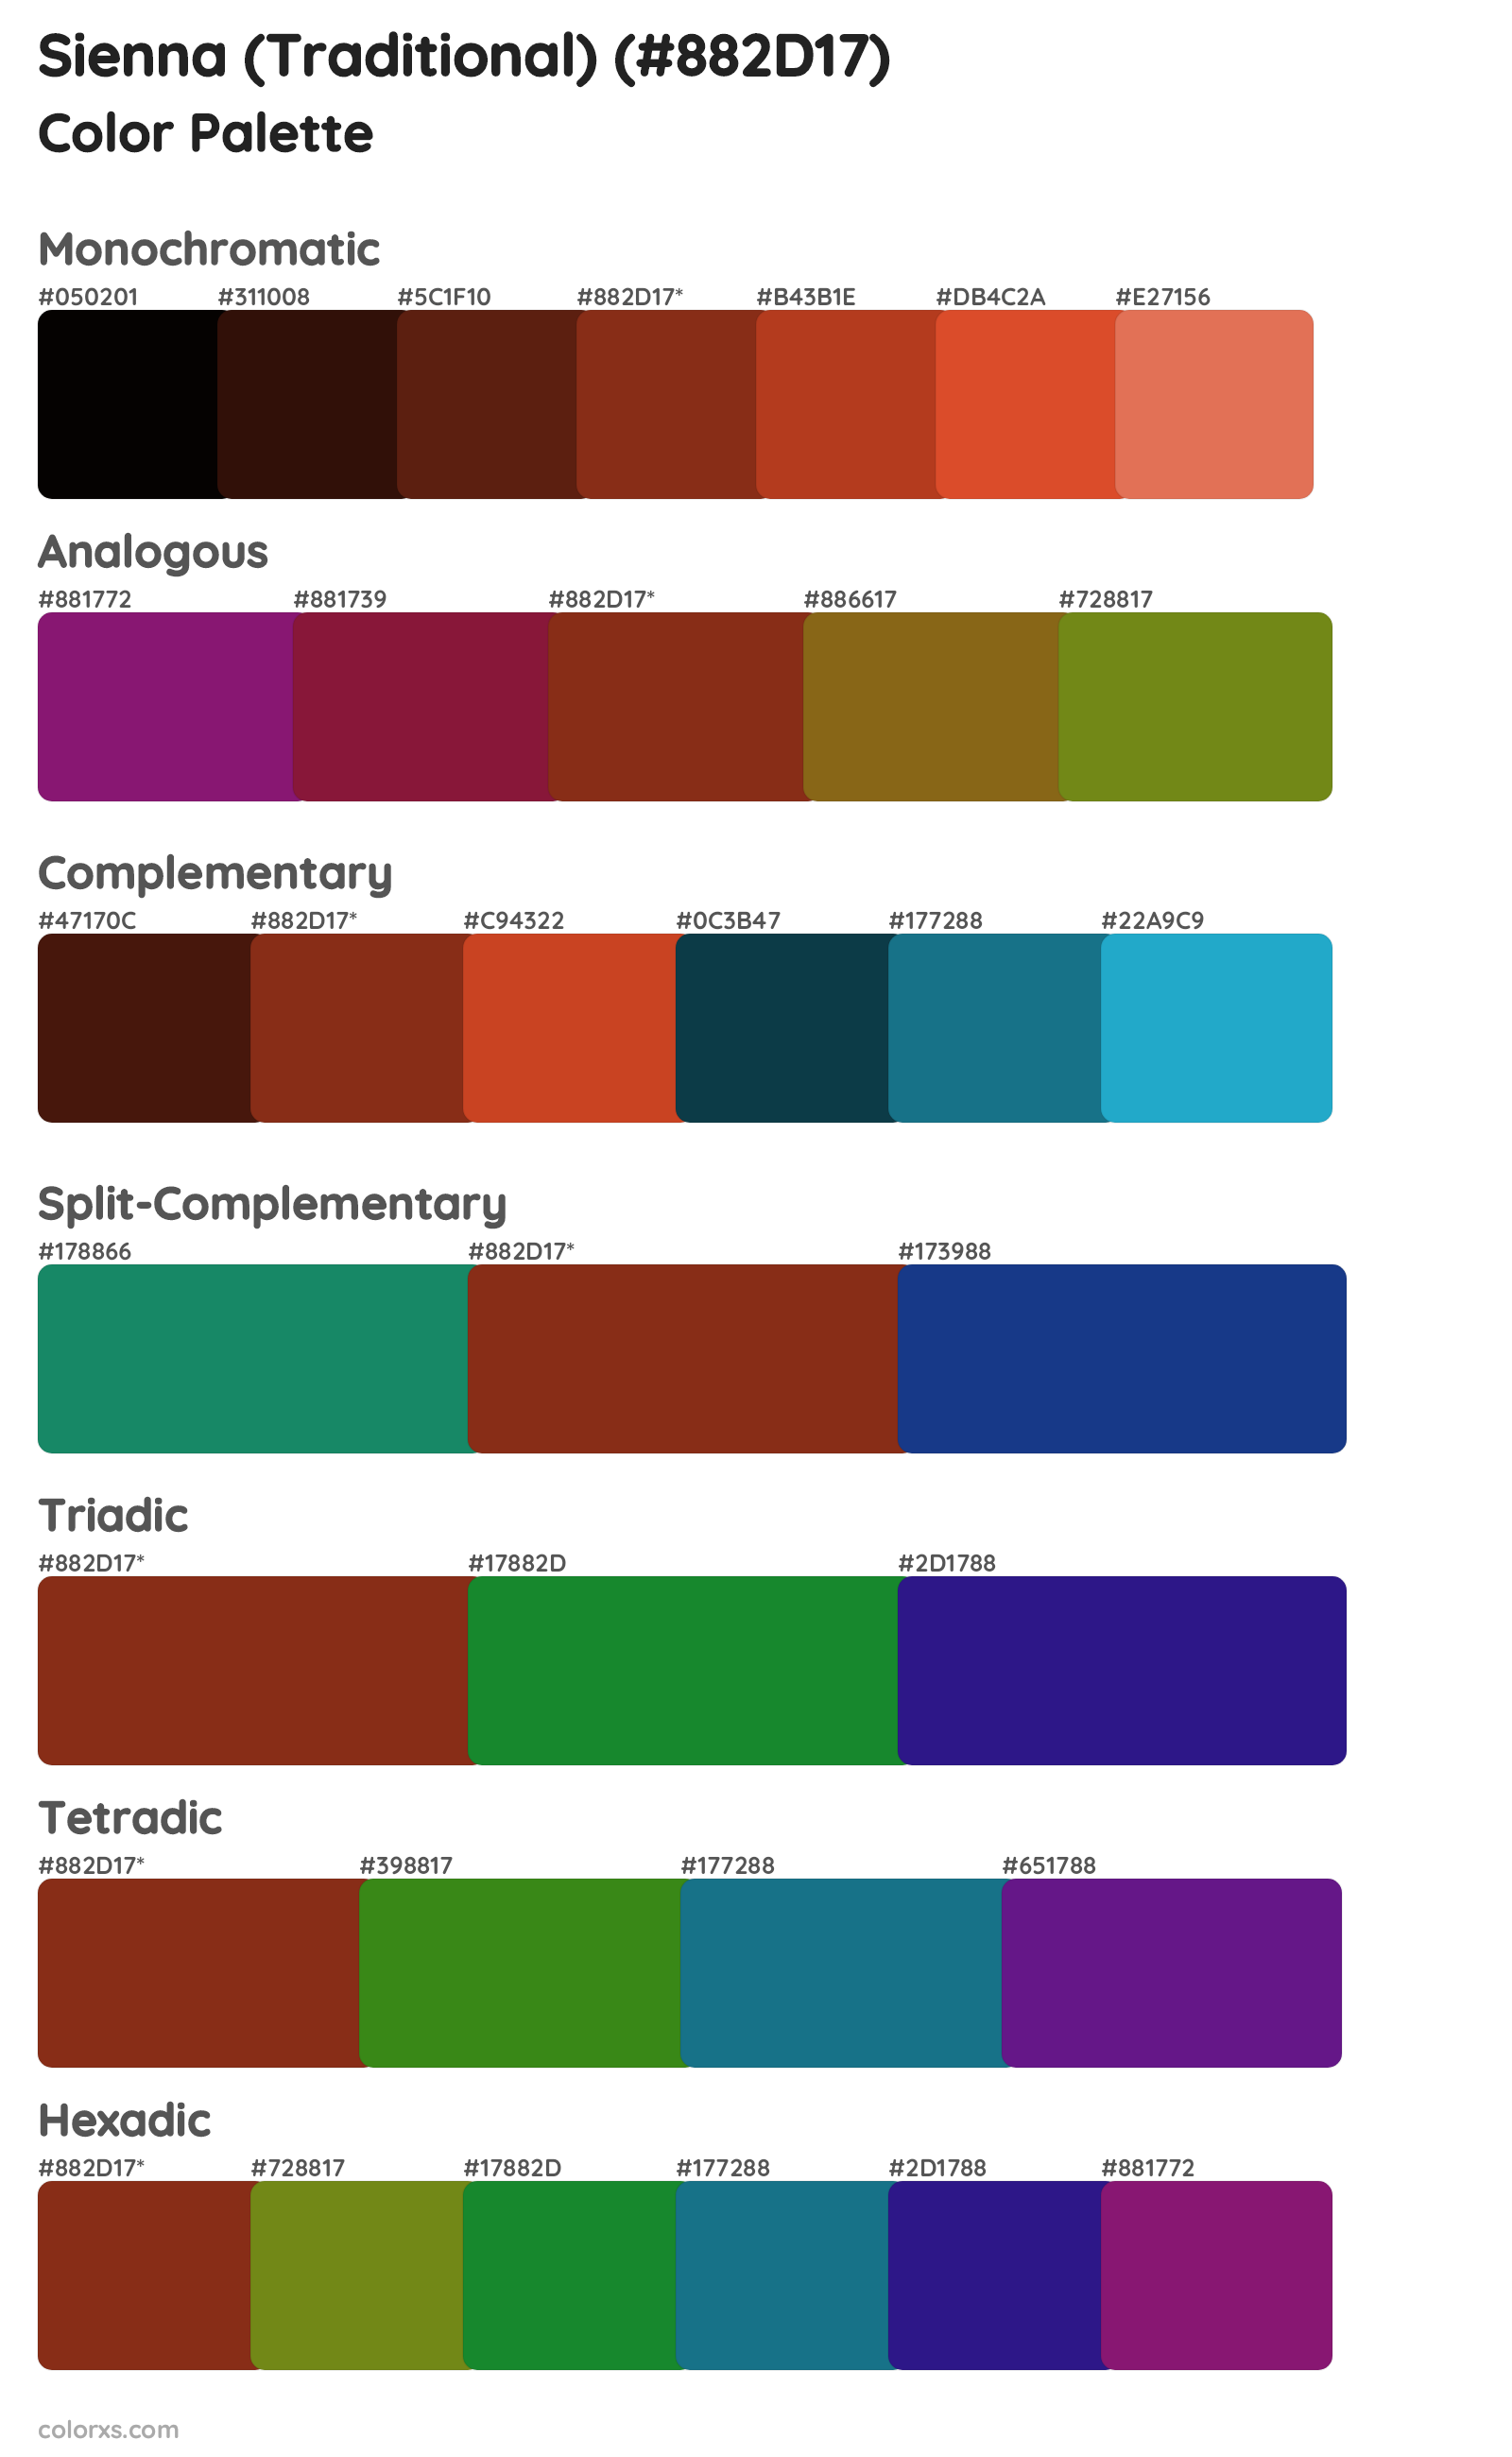 Sienna (Traditional) Color Scheme Palettes